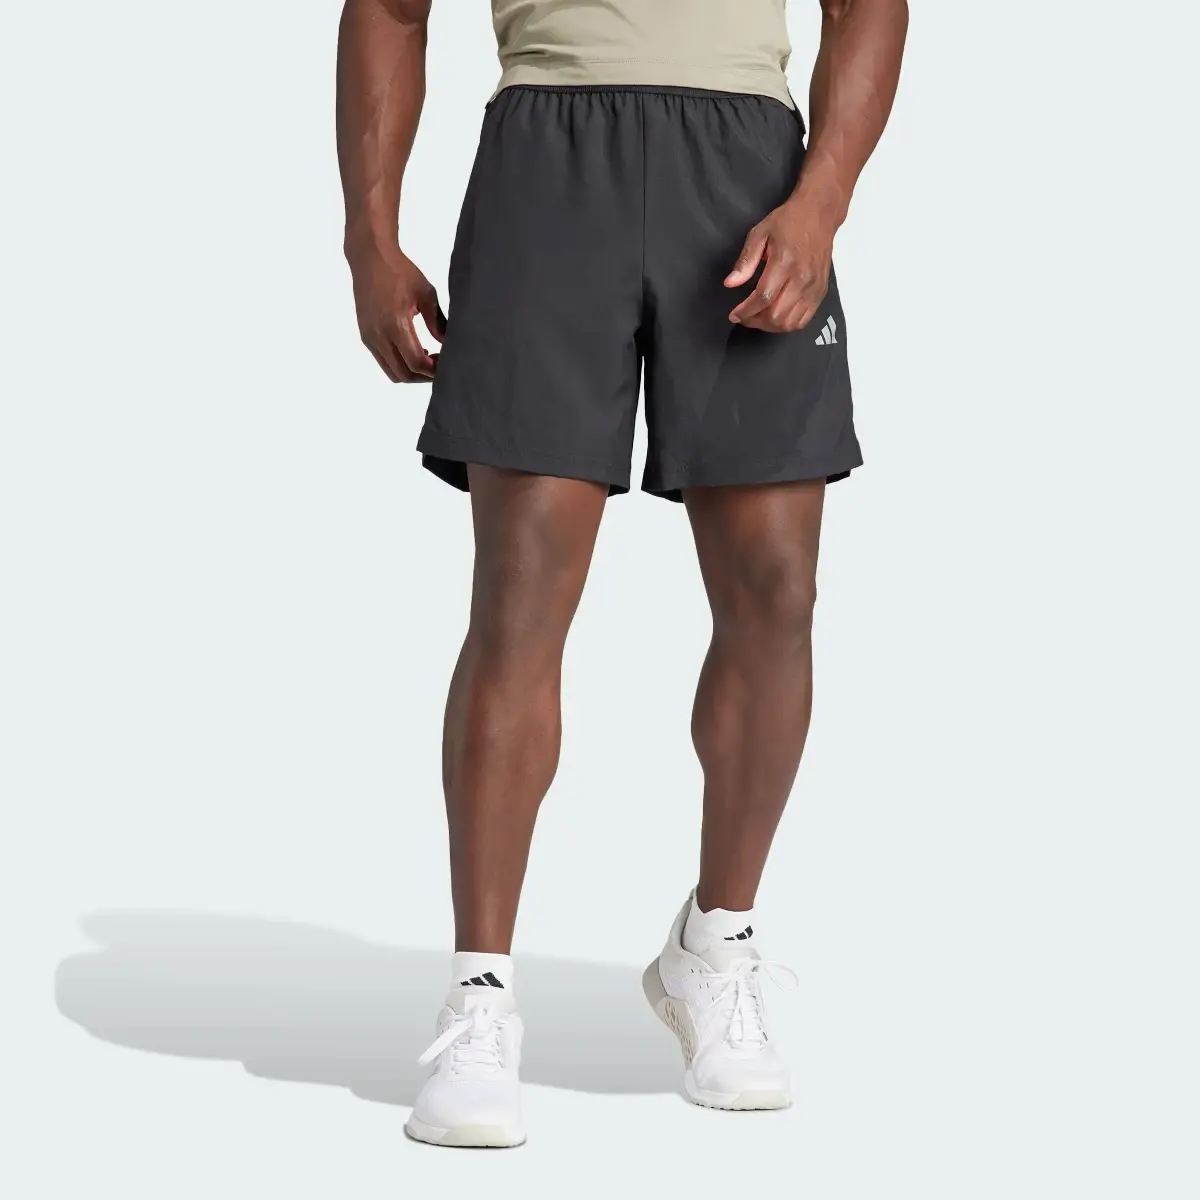 Adidas Gym Training Shorts. 1